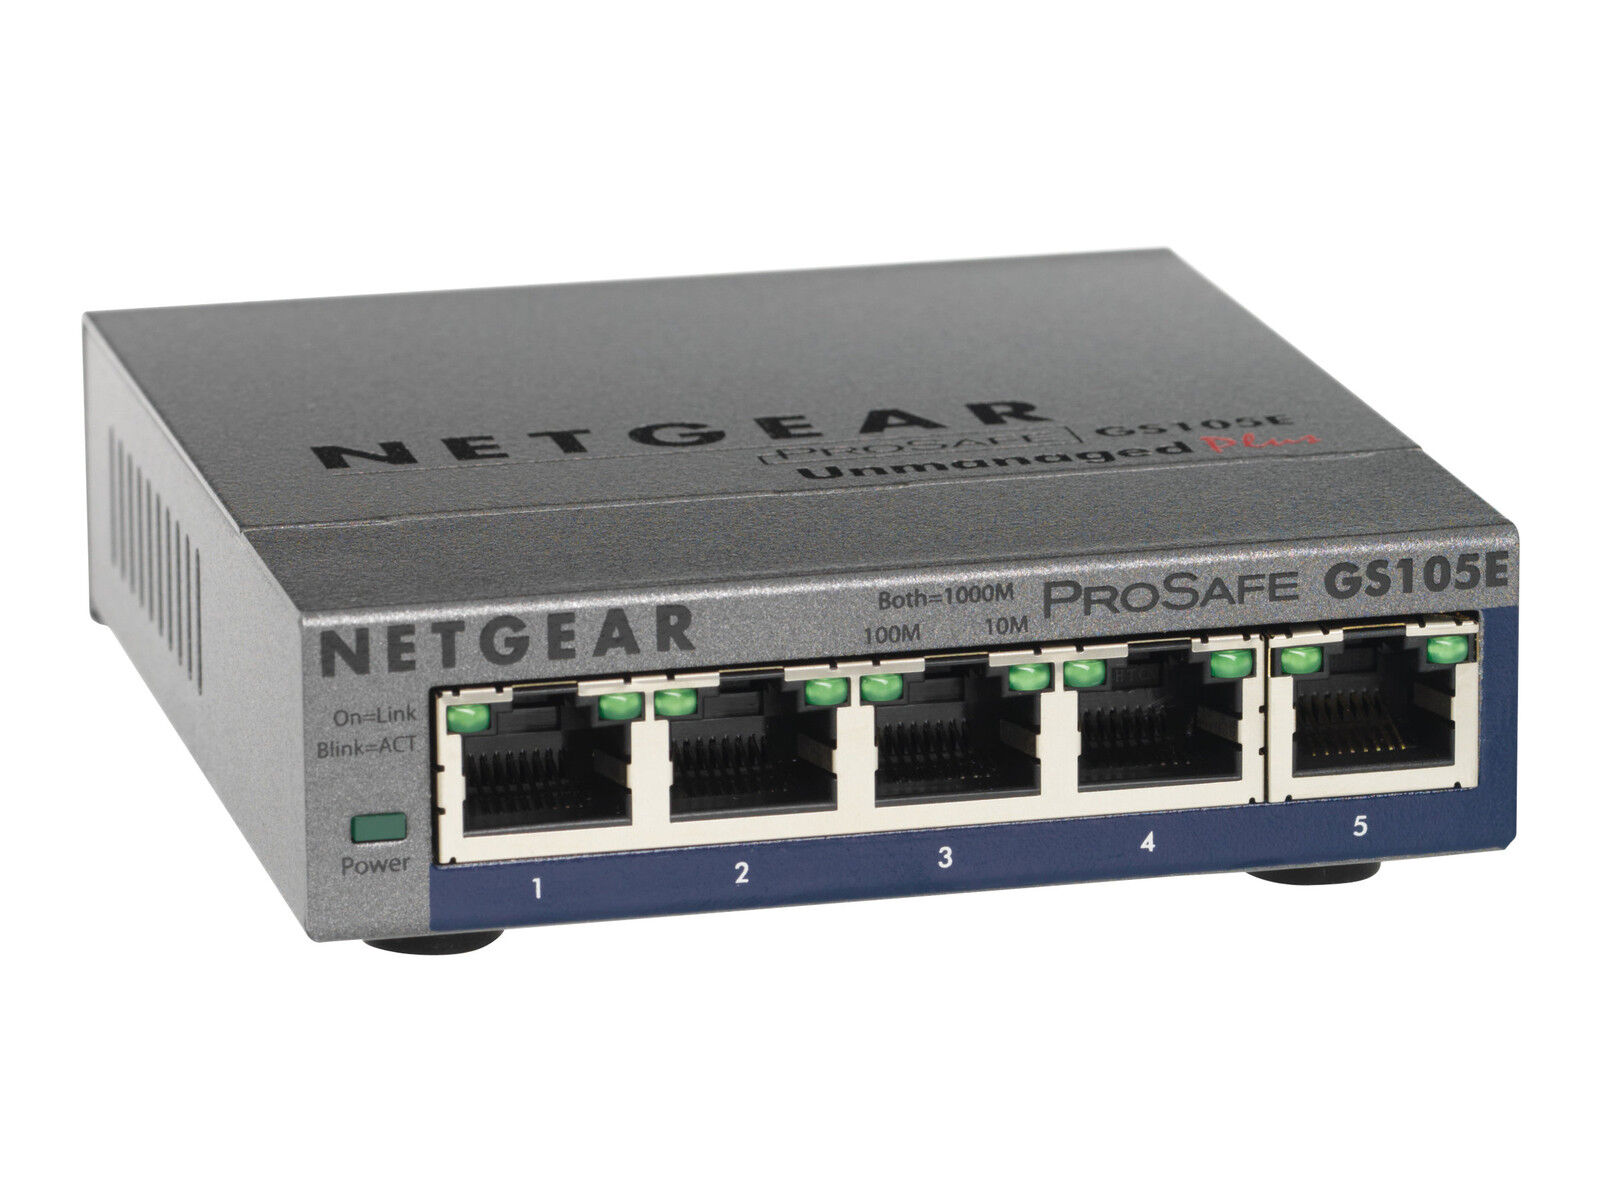 Netgear NET-GS105E-200NAS Prosafe 5-Port Gigabit Ethernet Switch RJ-45 Ports